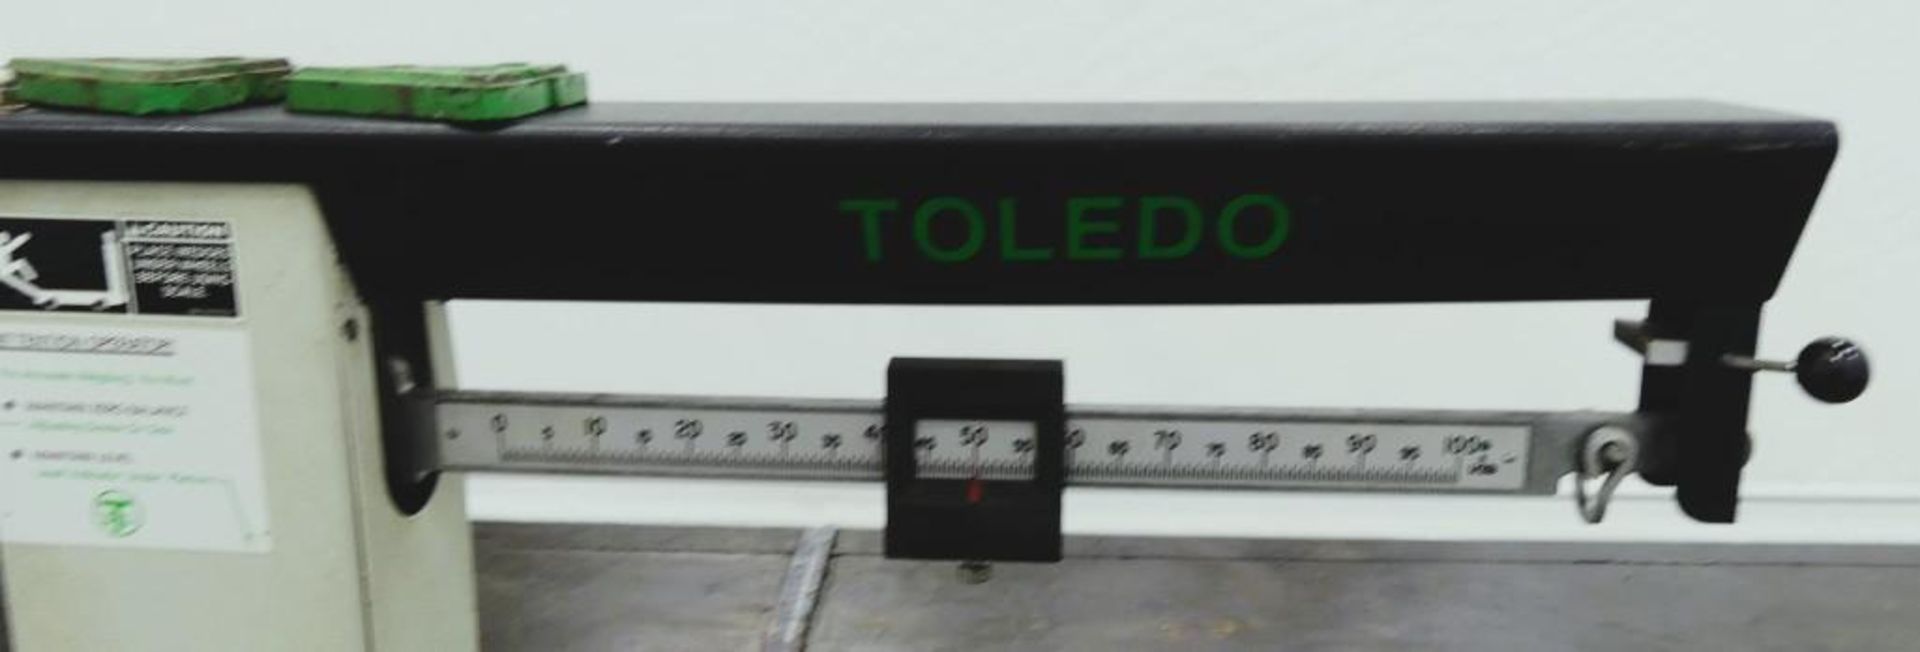 Toledo 1000 Lb Scale - Image 6 of 7